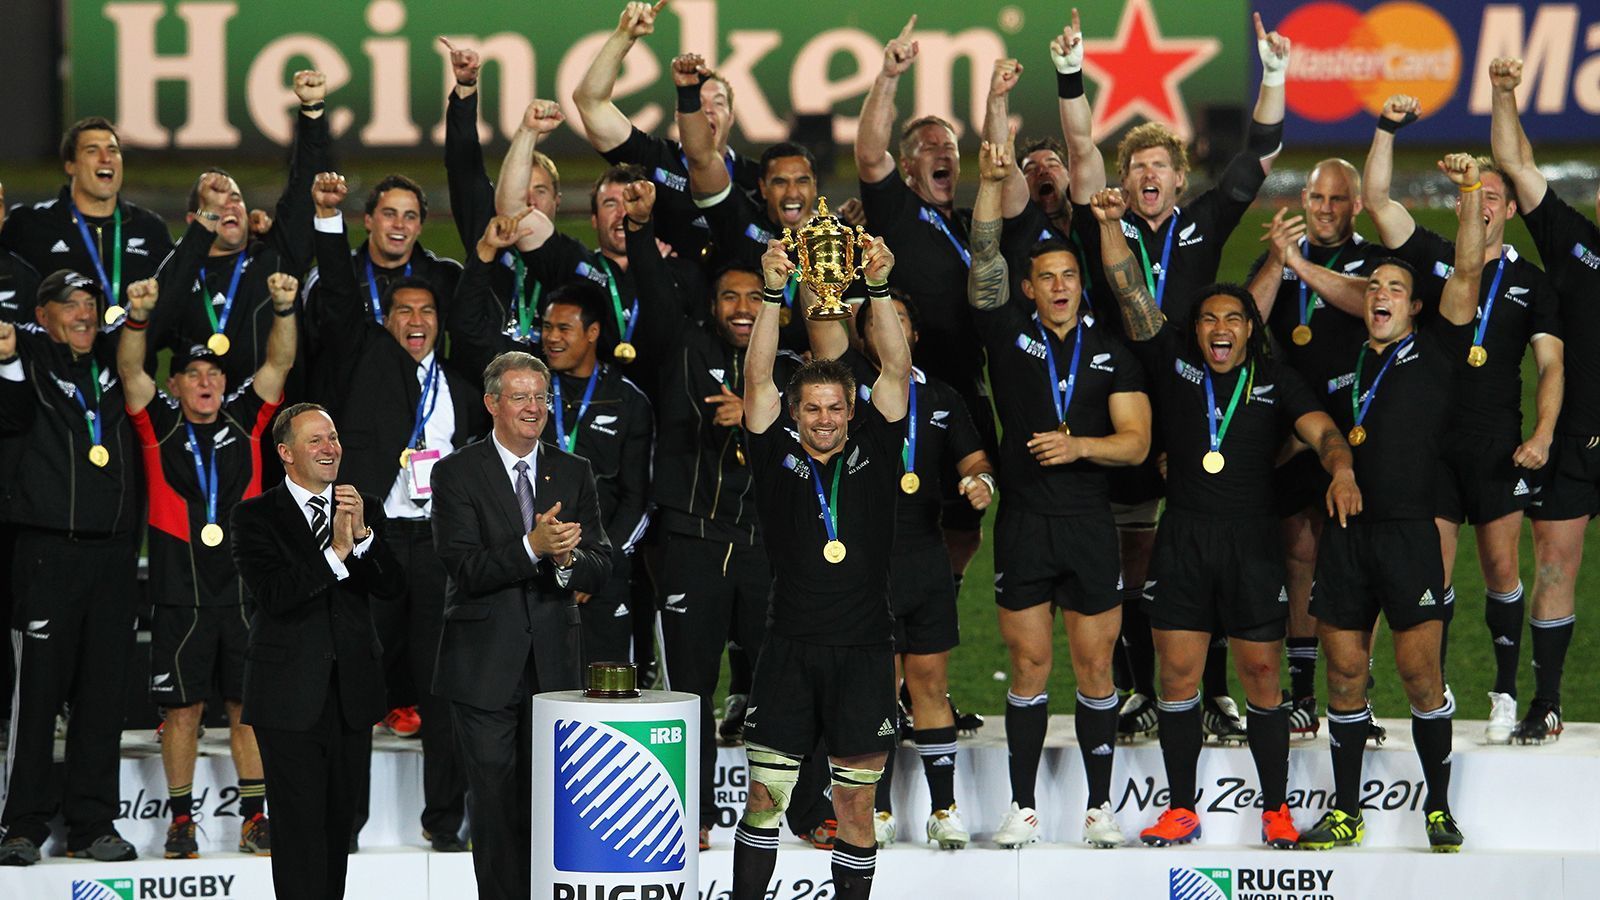 <strong>Neuseeland 2011</strong><br>
                Gastgeber: Neuseeland; Finale: Neuseeland - Frankreich 8:7
